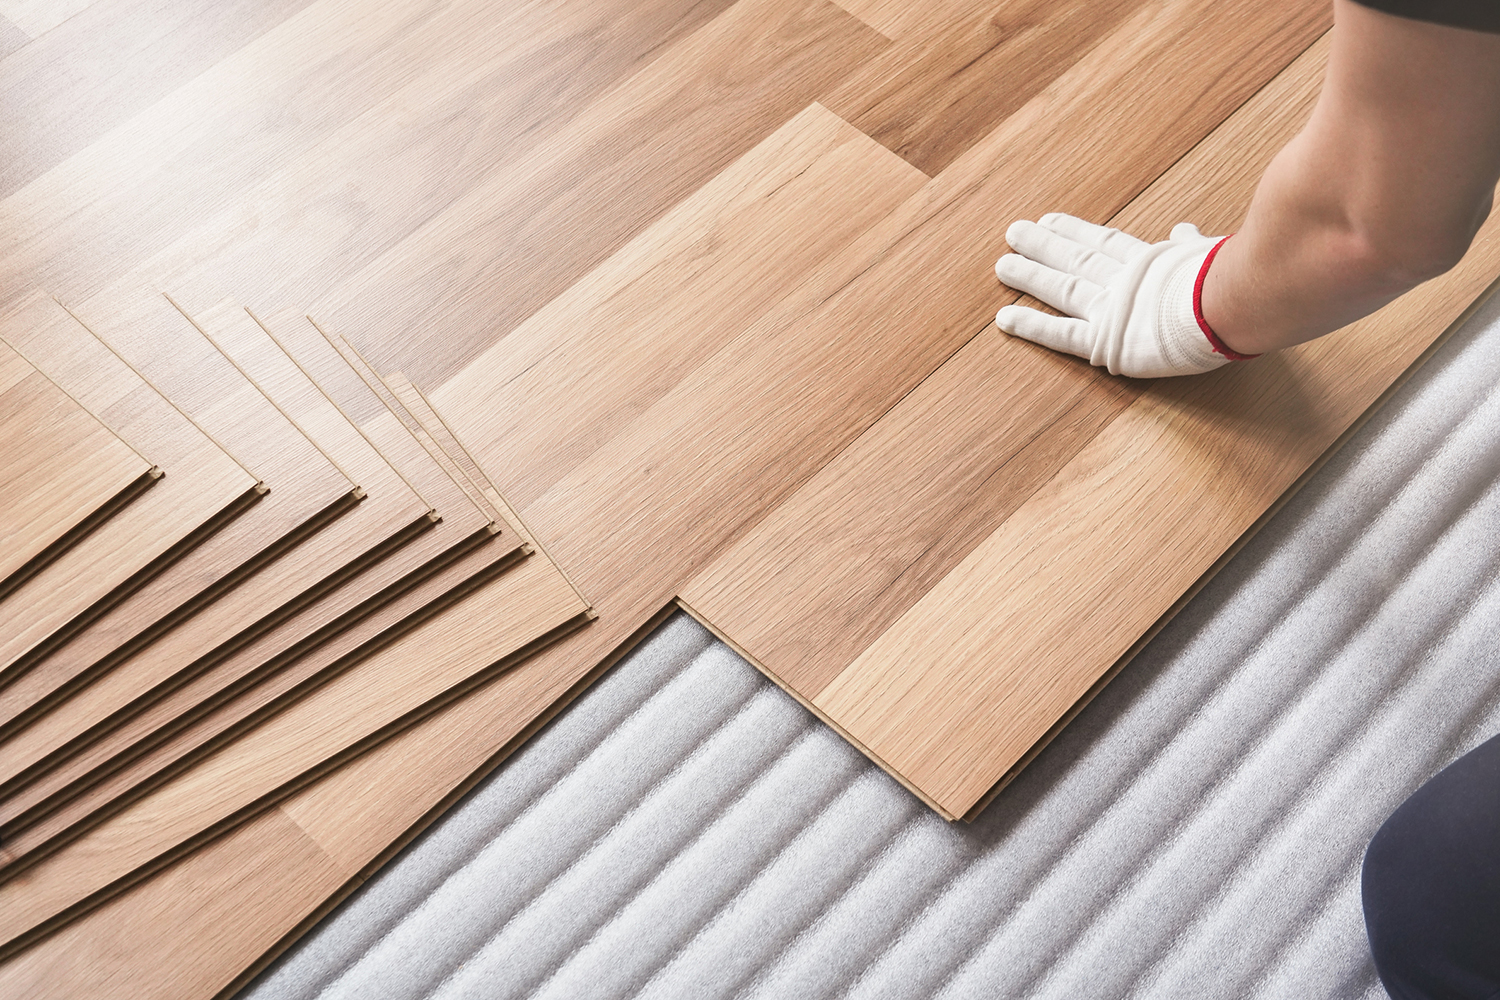 hardwood flooring vs laminate flooring what to choose 2